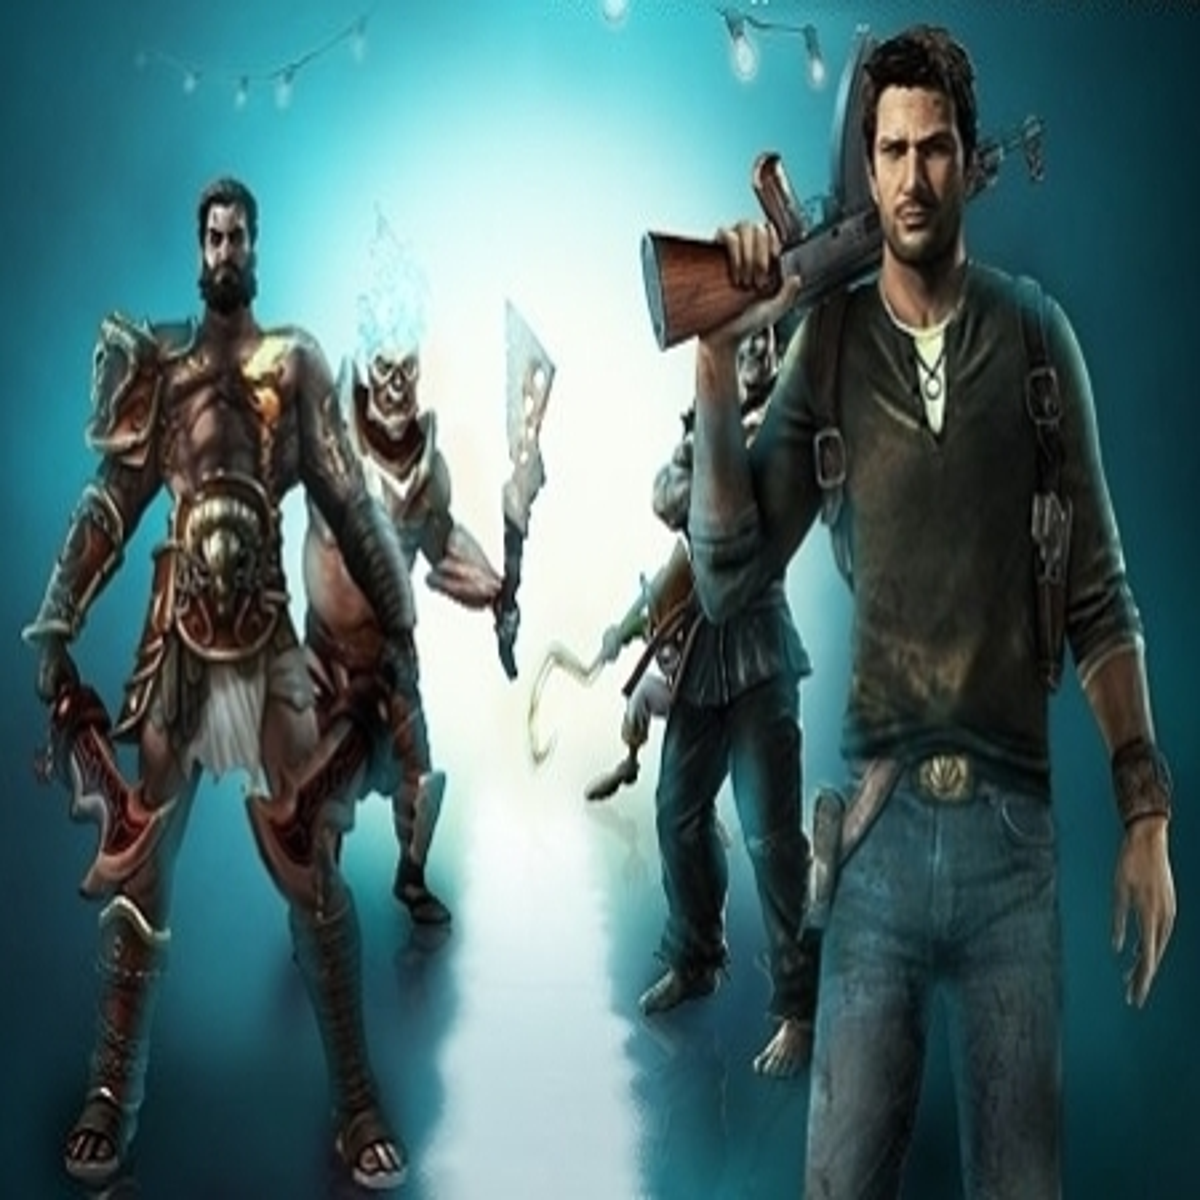 Personagens de Uncharted e BioShock estão em PlayStation Battle Royale